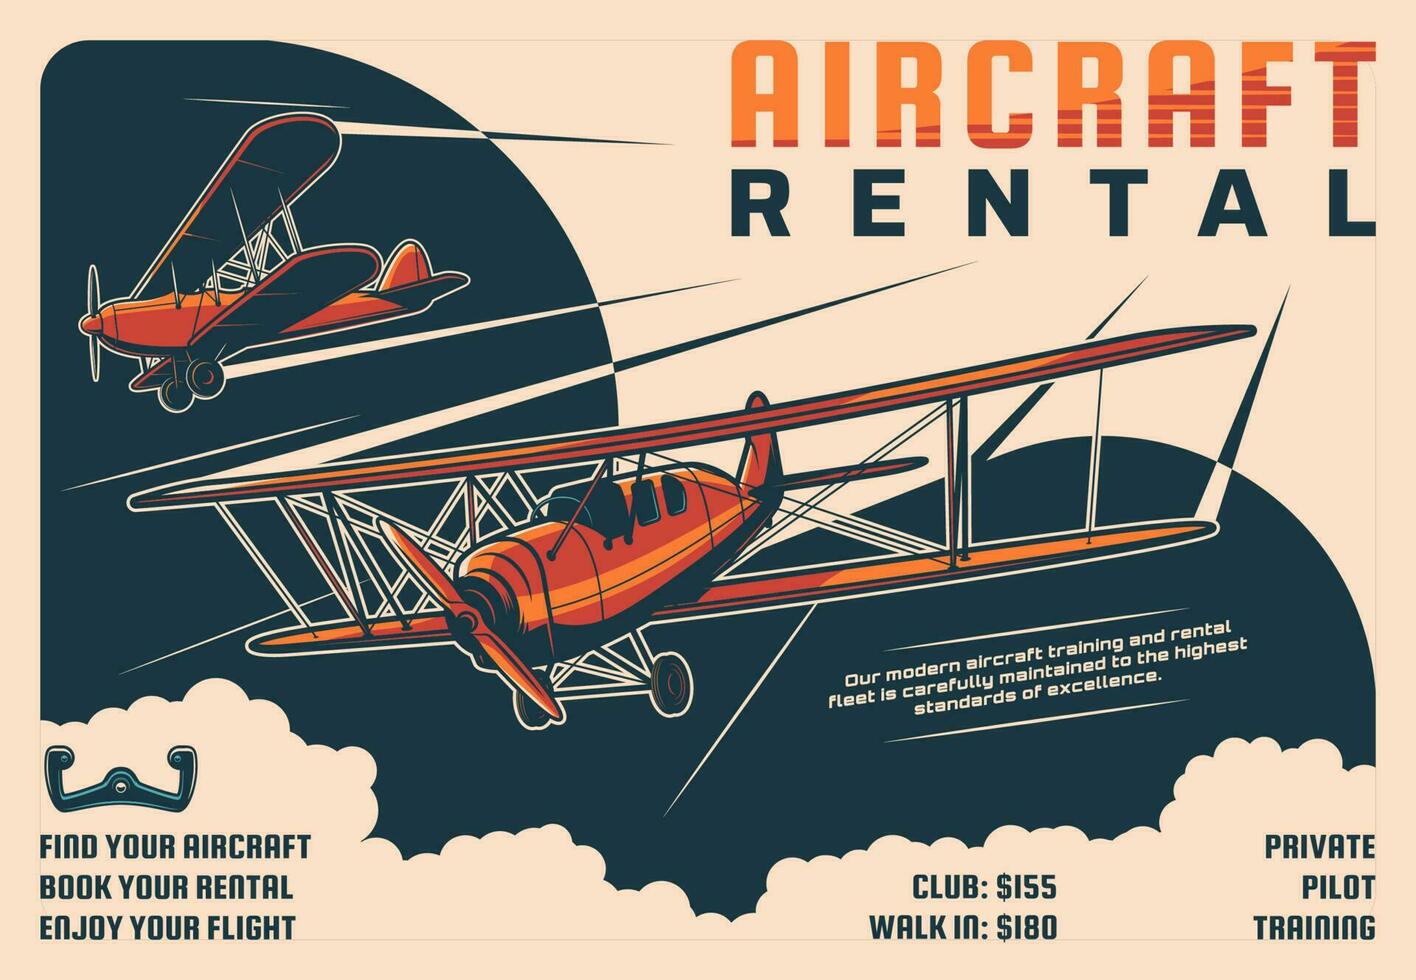 Rental aircraft tours, private pilot retro poster vector